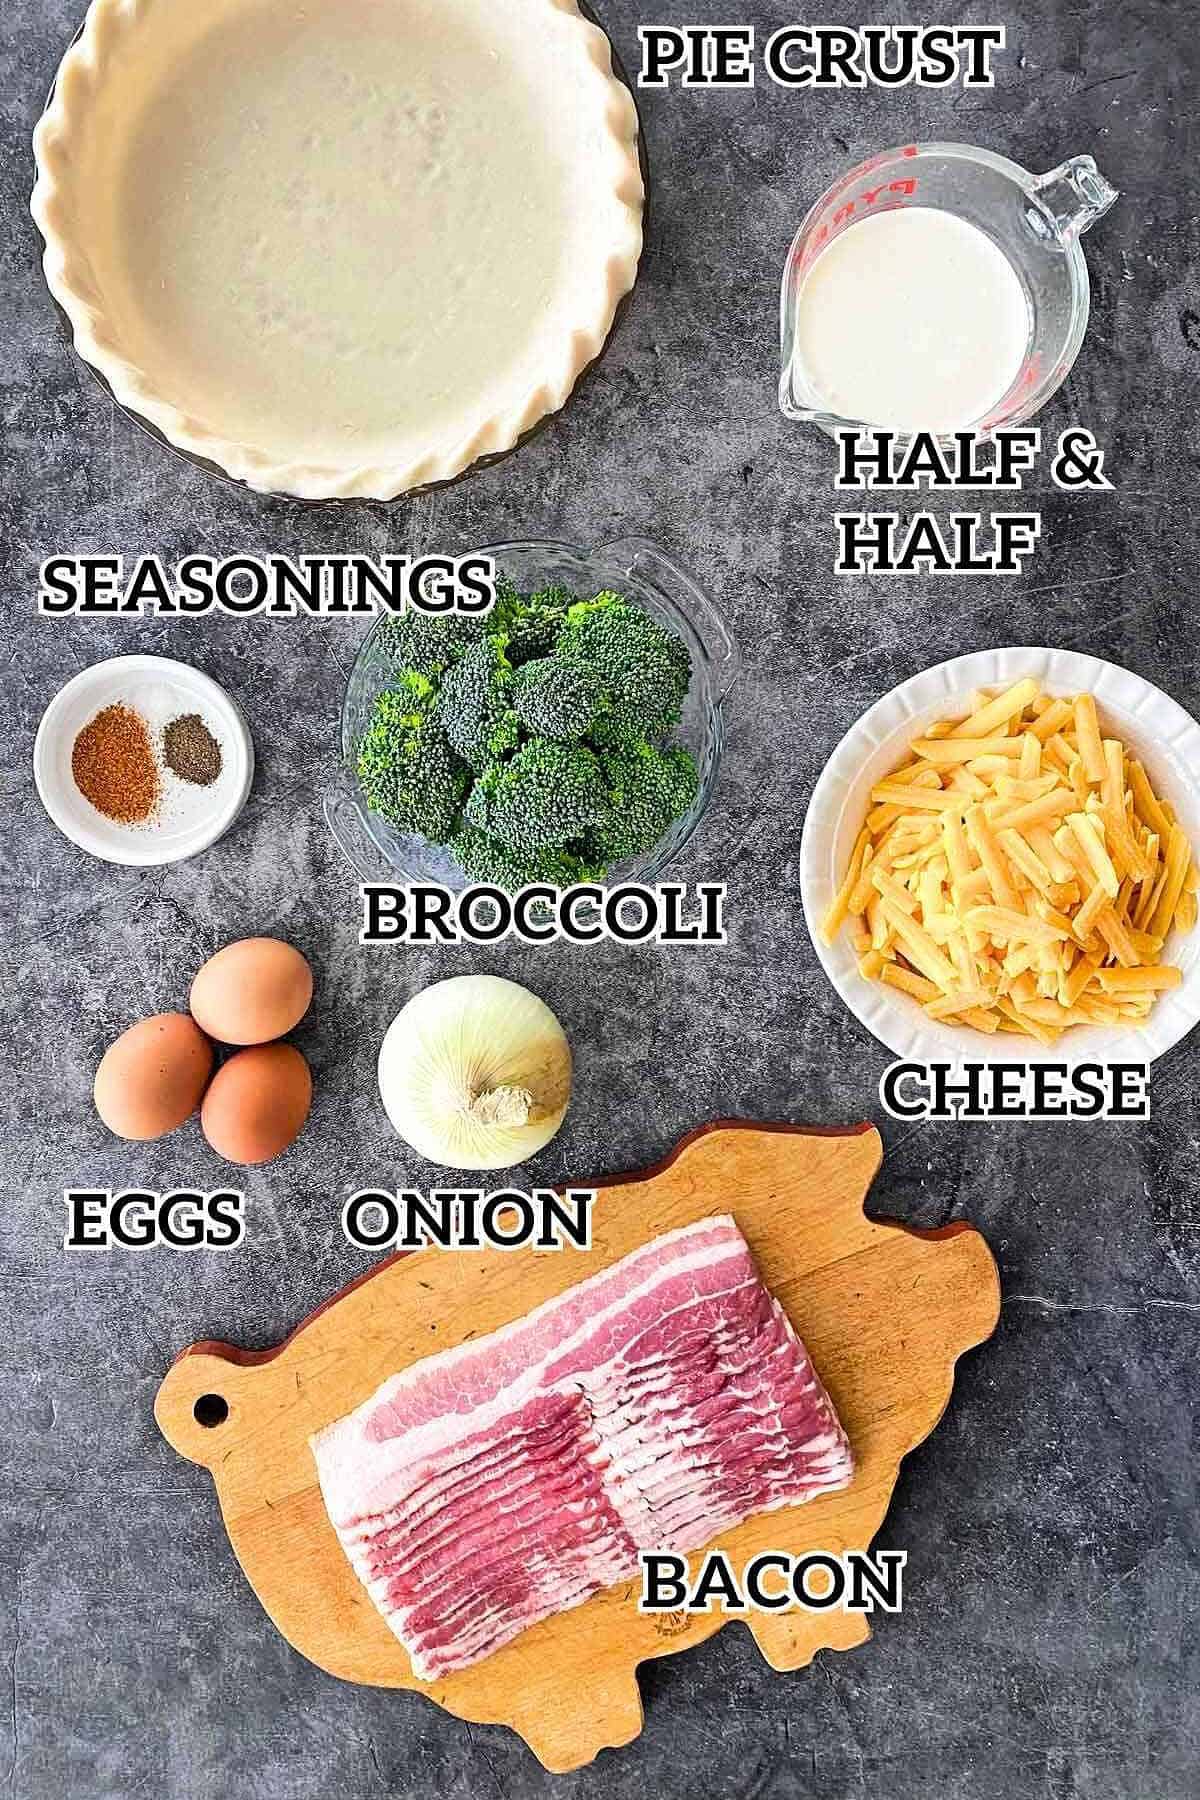 Pie crust, cheese, onion, broccoli, bacon, eggs, half and half, and seasonings to make broccoli bacon quiche.